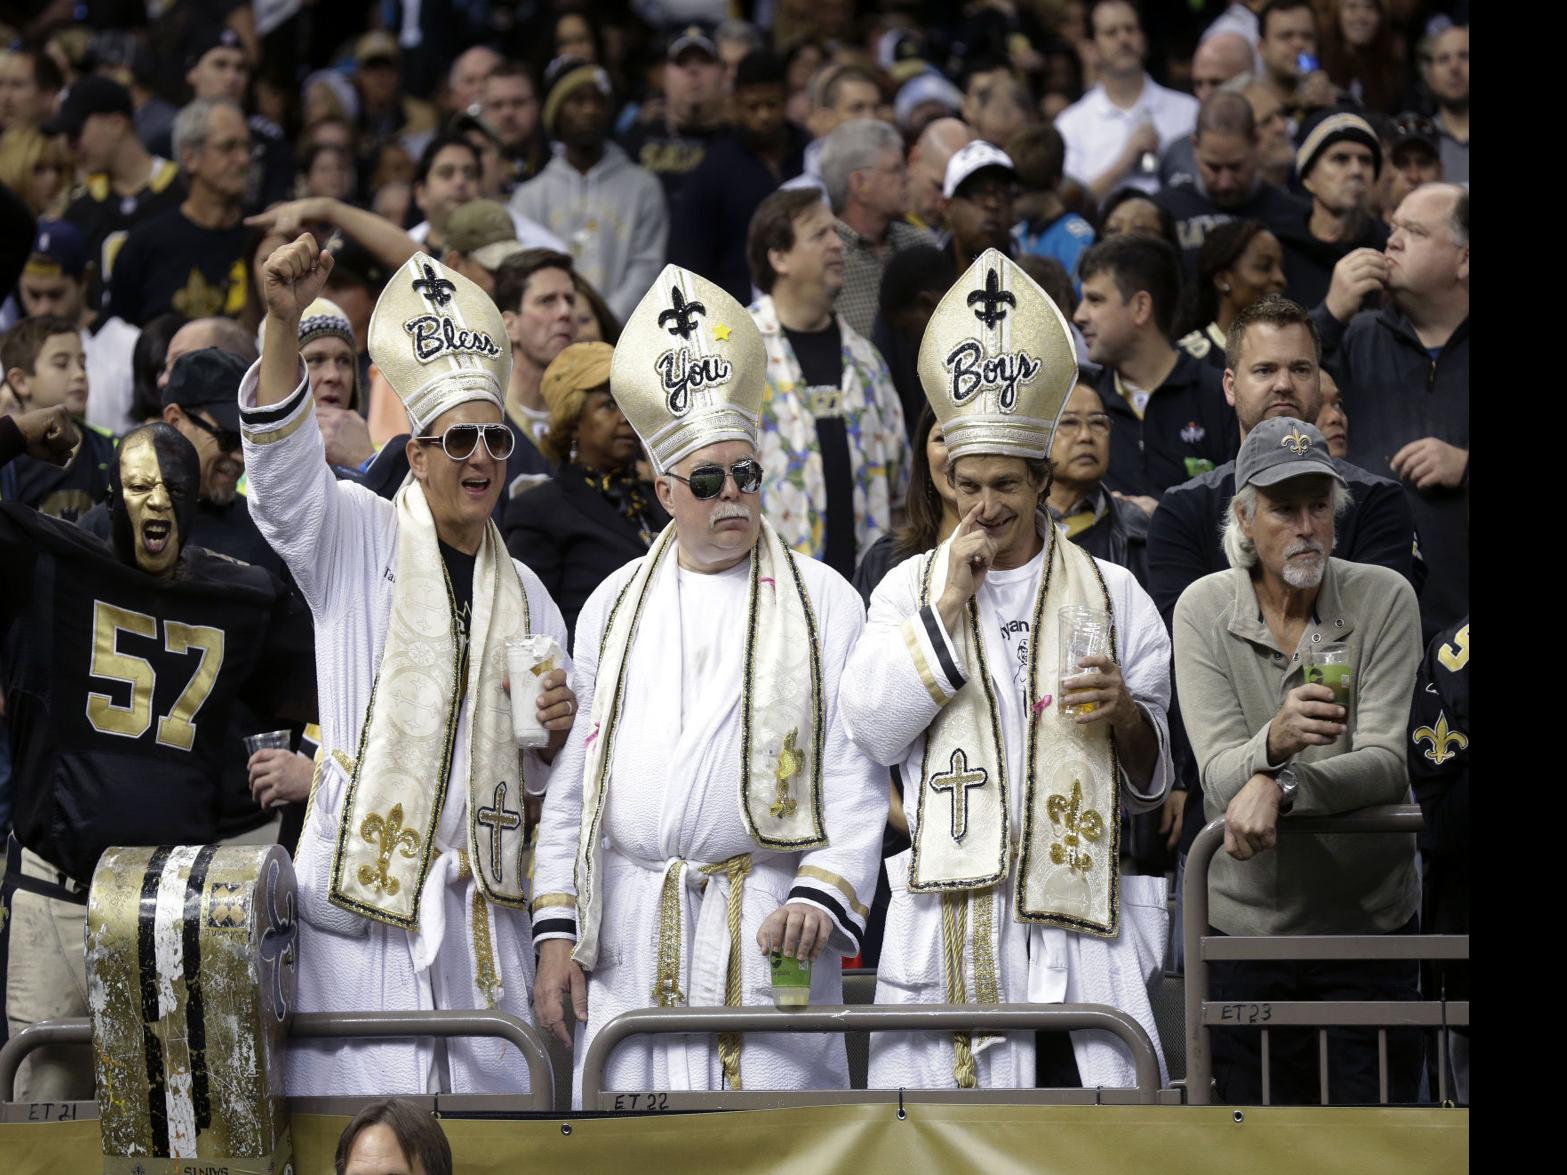 What happens when Saints superfans, 2 of the 3 You Boys Popes, New Popes pop up | Saints |